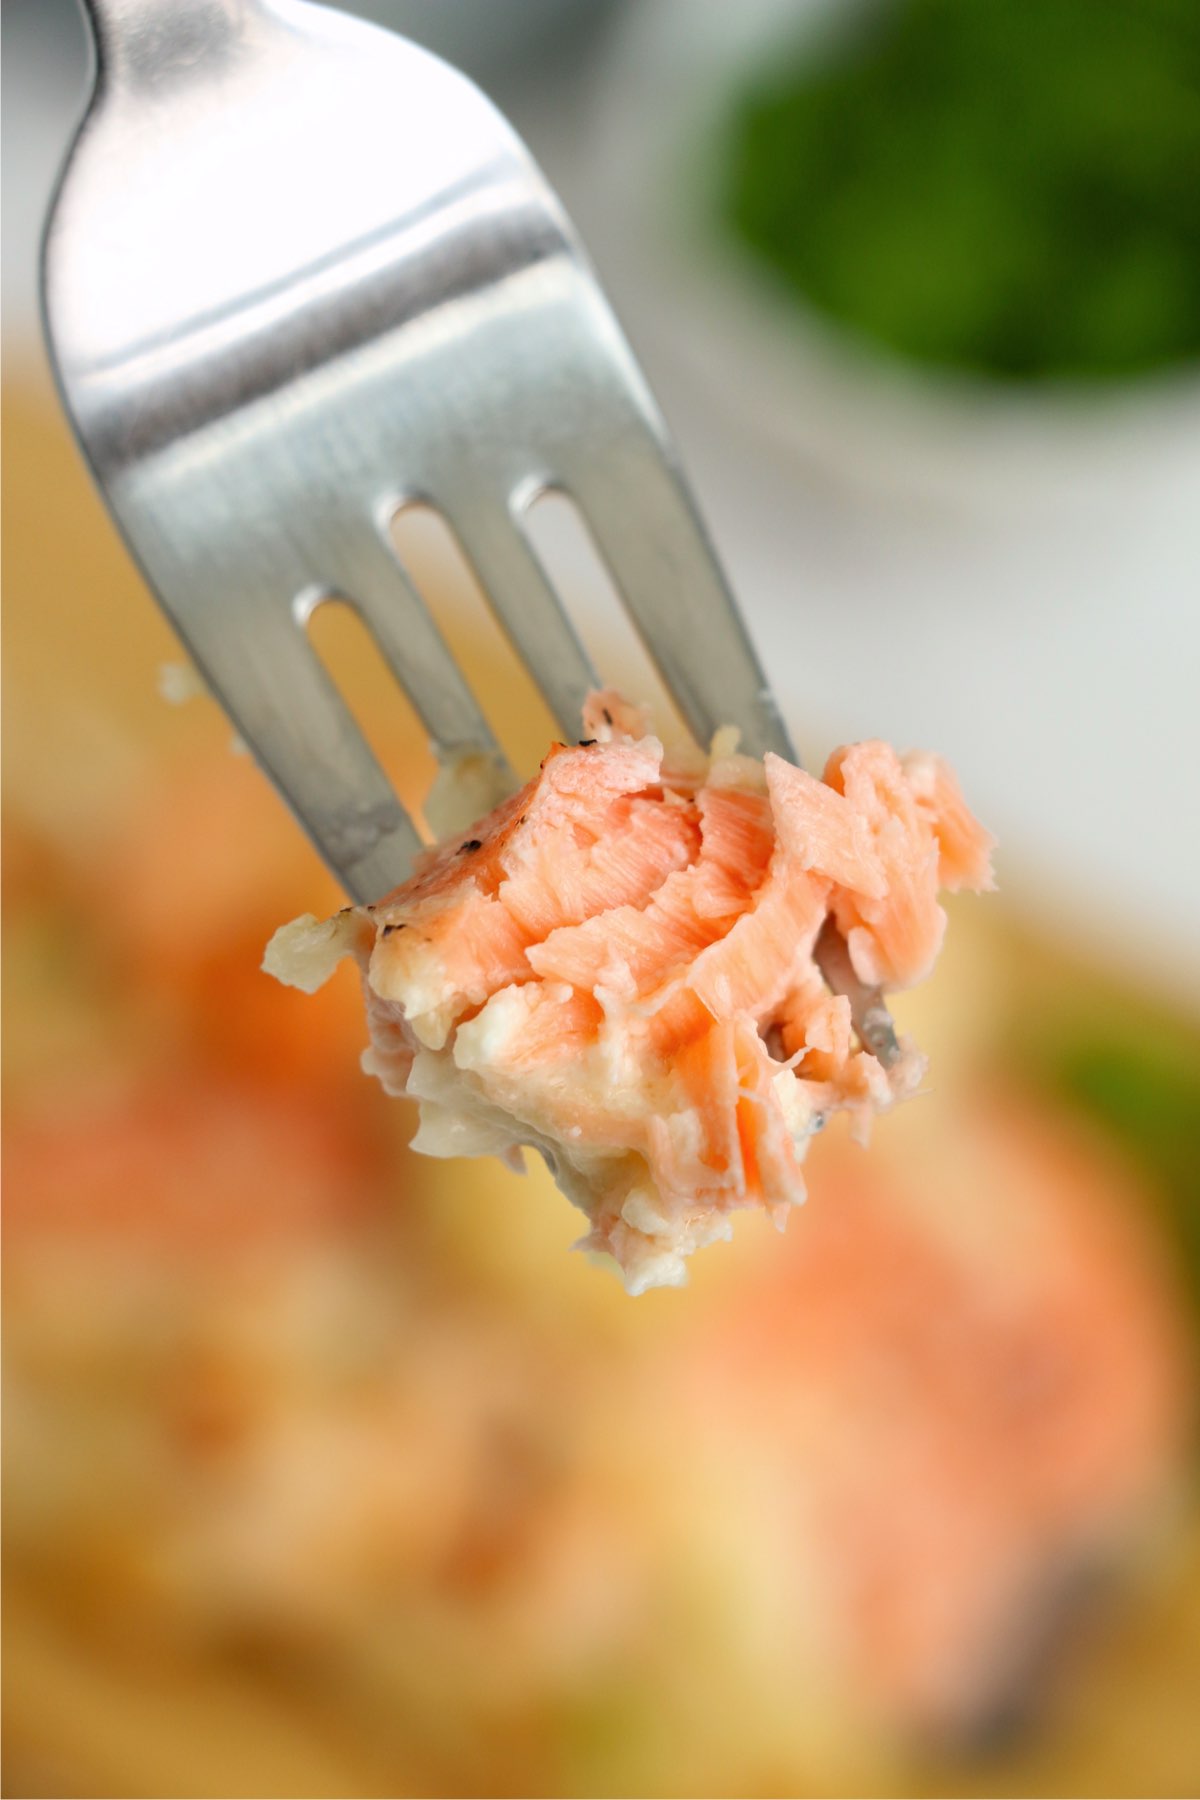 Closeup shot of forkful of salmon